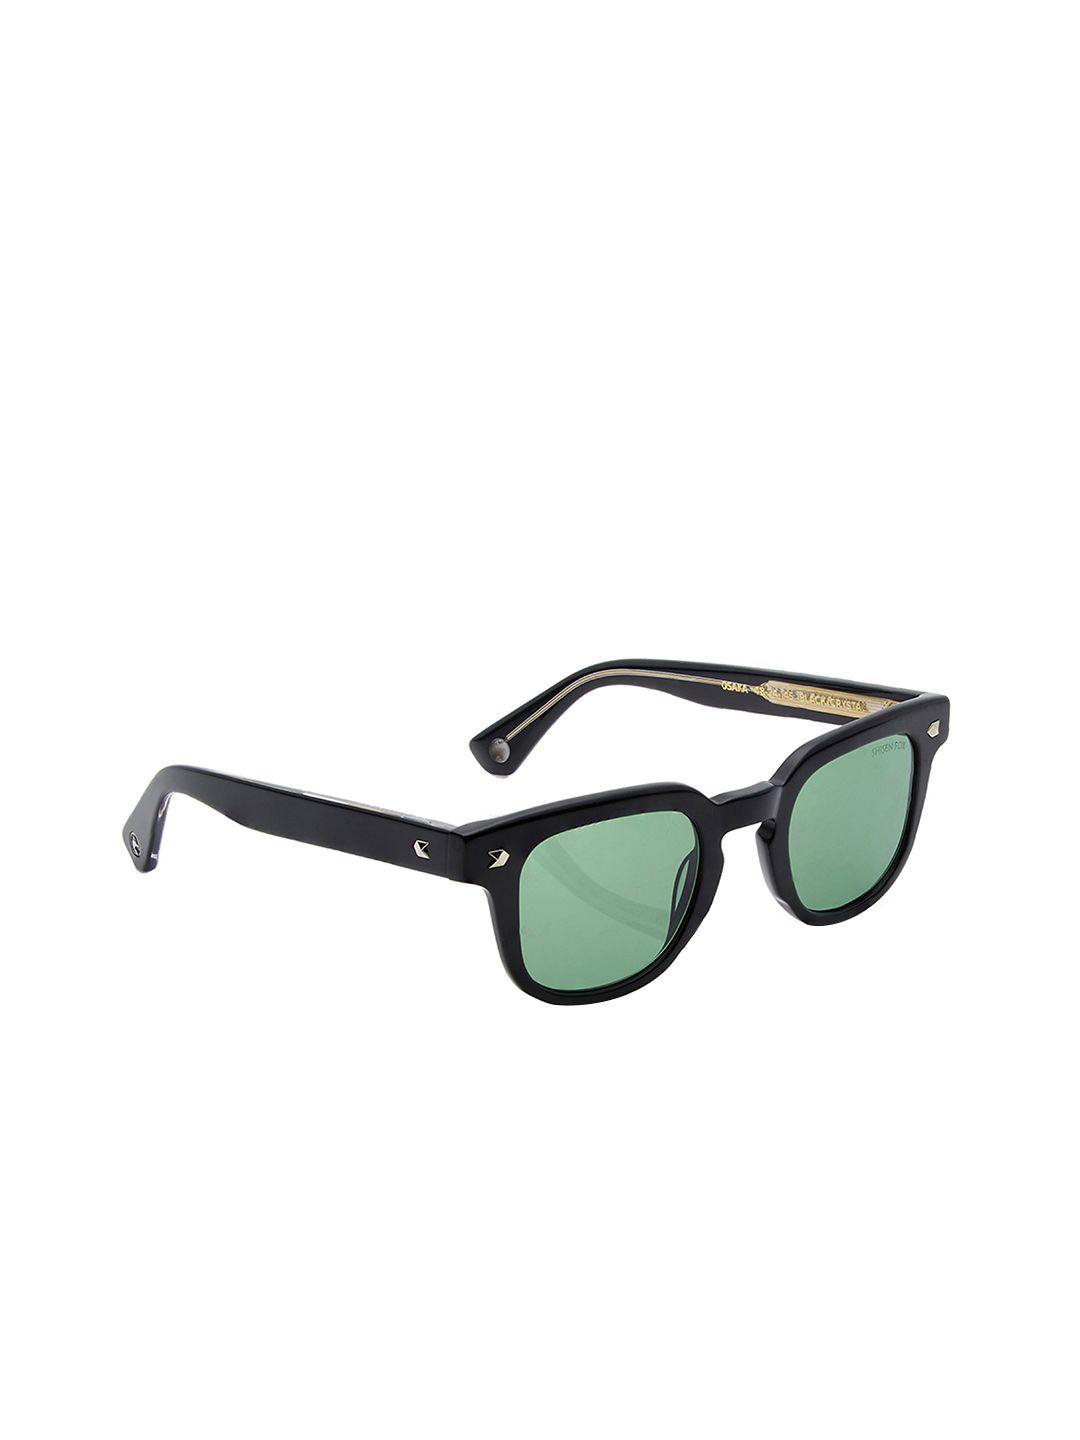 shisen fox osaka unisex square sunglasses with uv protected lens sg056